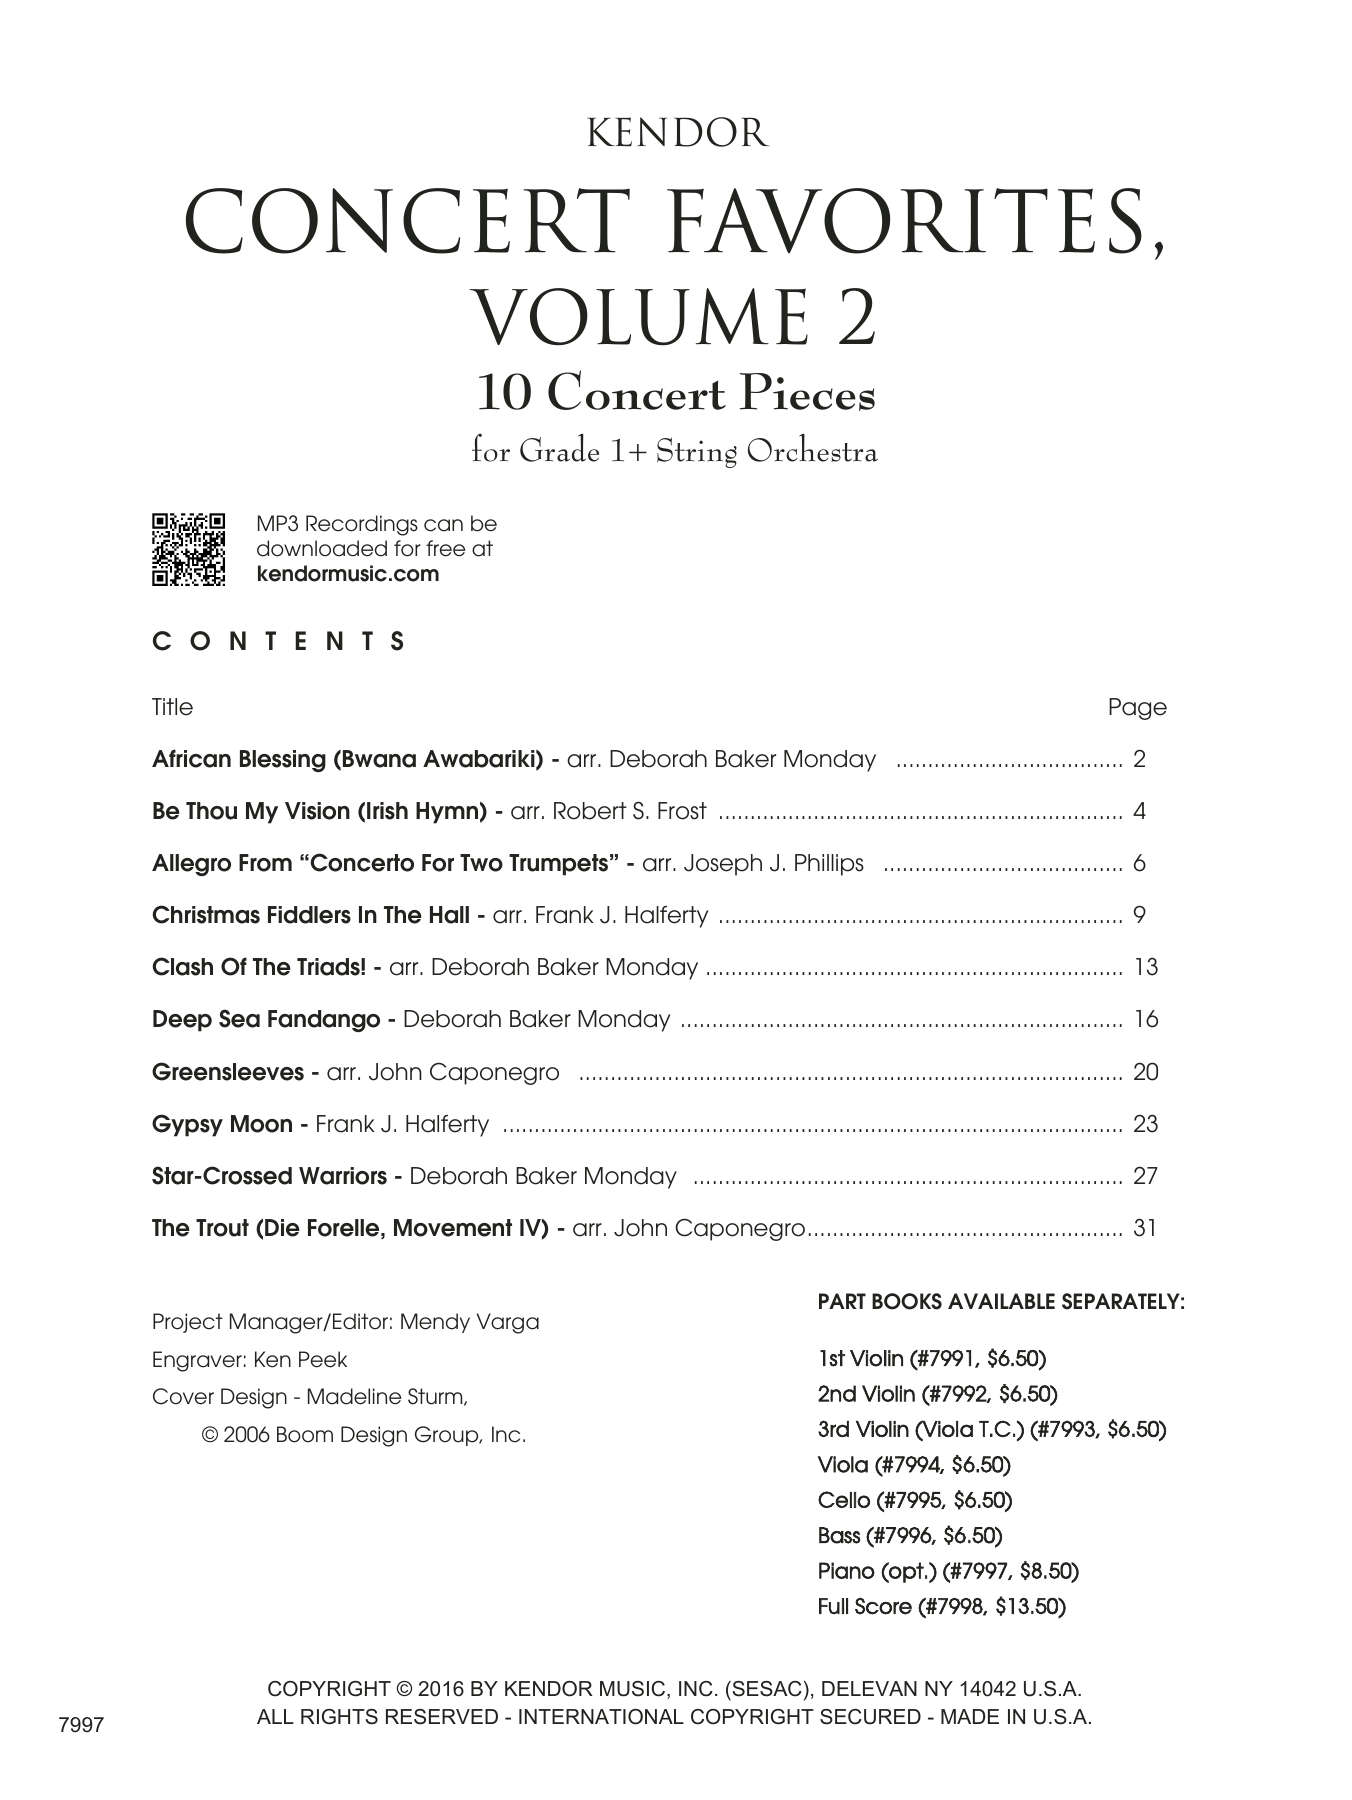 Kendor Concert Favorites, Volume 2 - Piano (opt.) - Piano (optional) (Orchestra) von Various